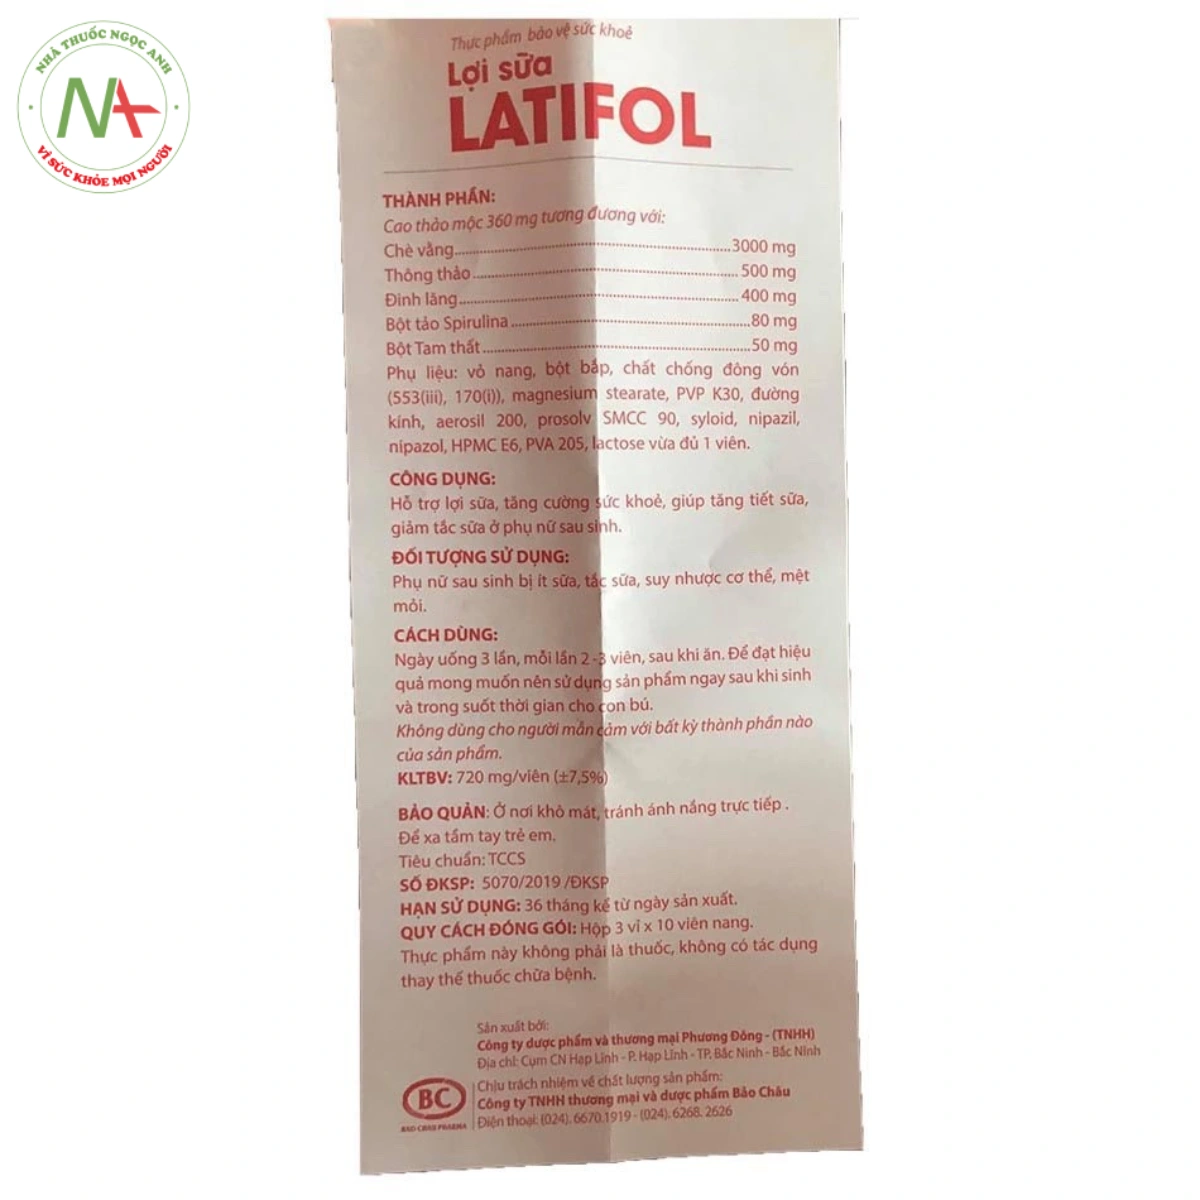 Hướng dẫn sử dụng Lợi sữa Latifol